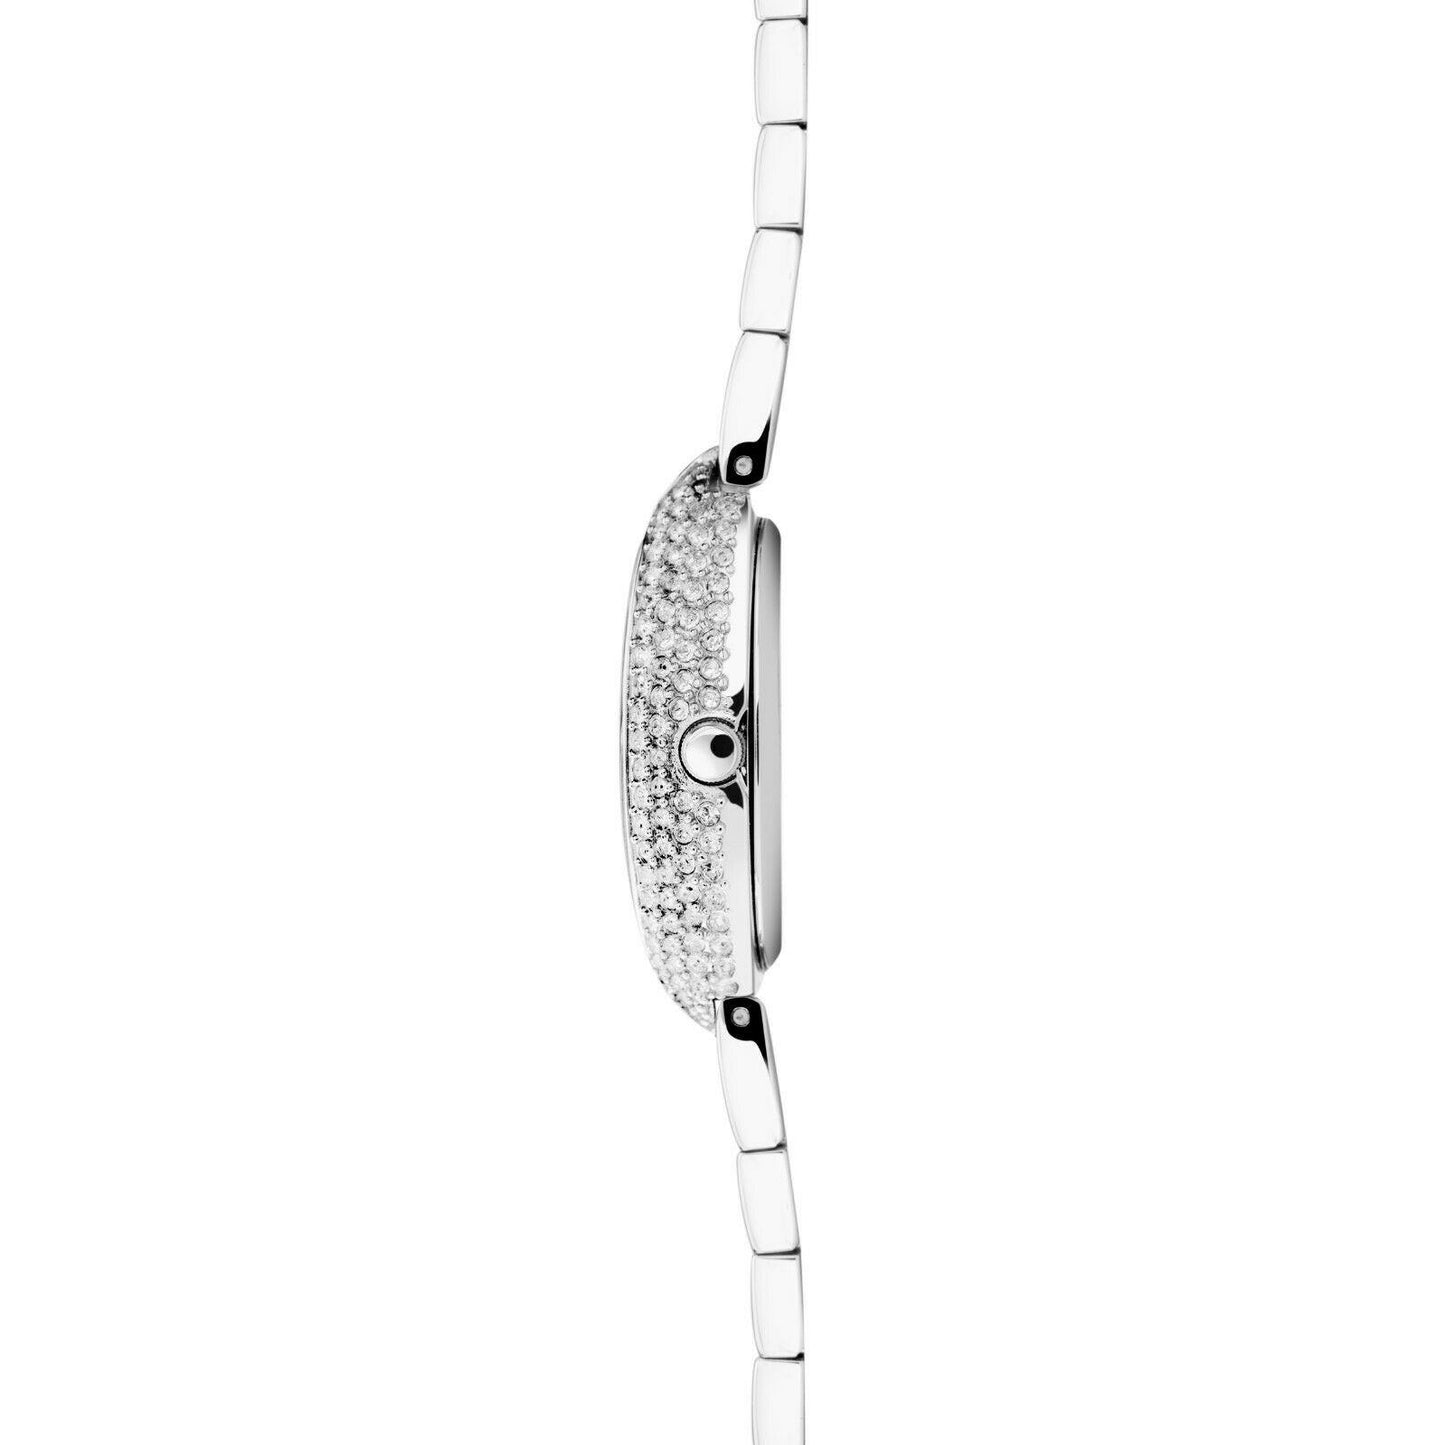 Seksy Ladies Fashion Oval Sunray Dial Silver Coloured Rhodium Bracelet Watch 2309